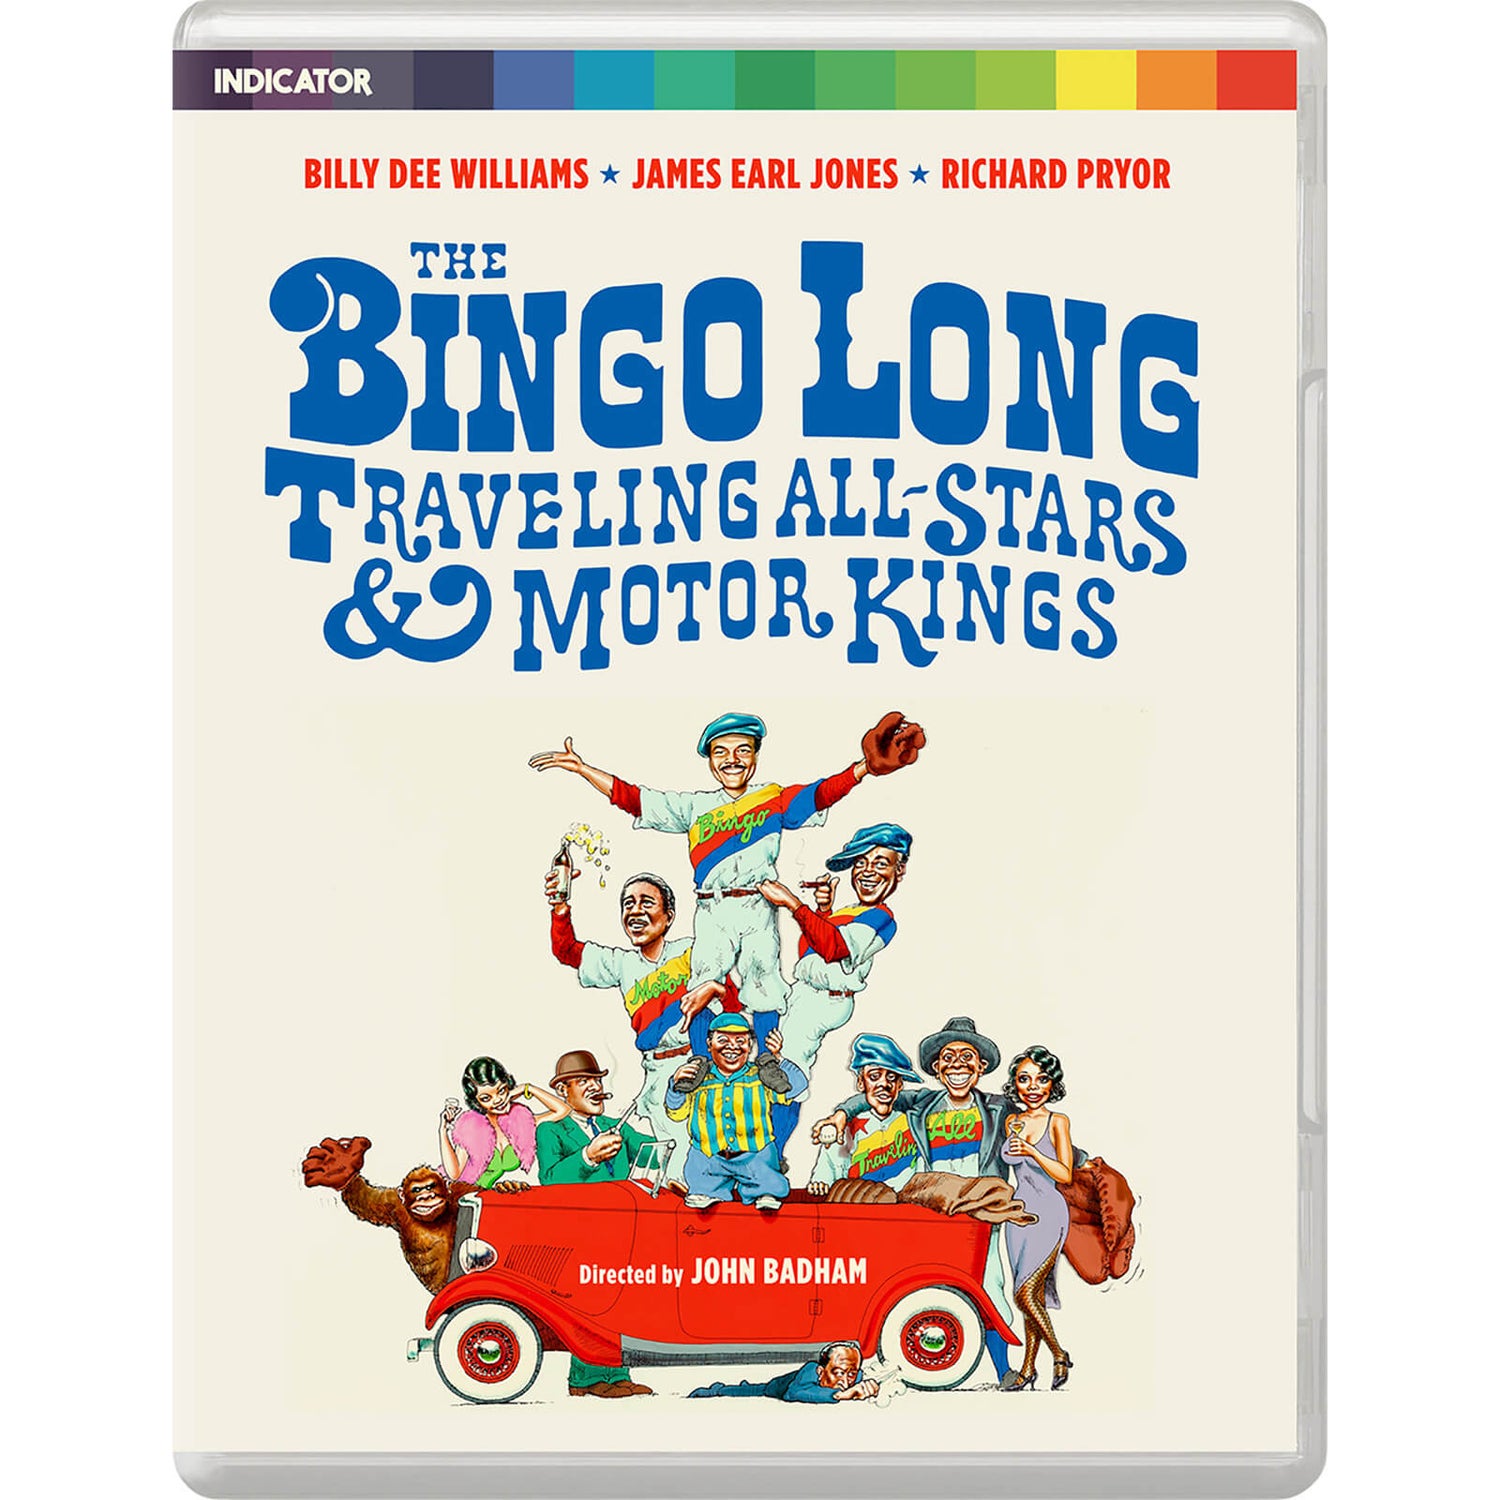 Die Bingo Long Traveling All-Stars & Motor Kings - Limitierte Auflage